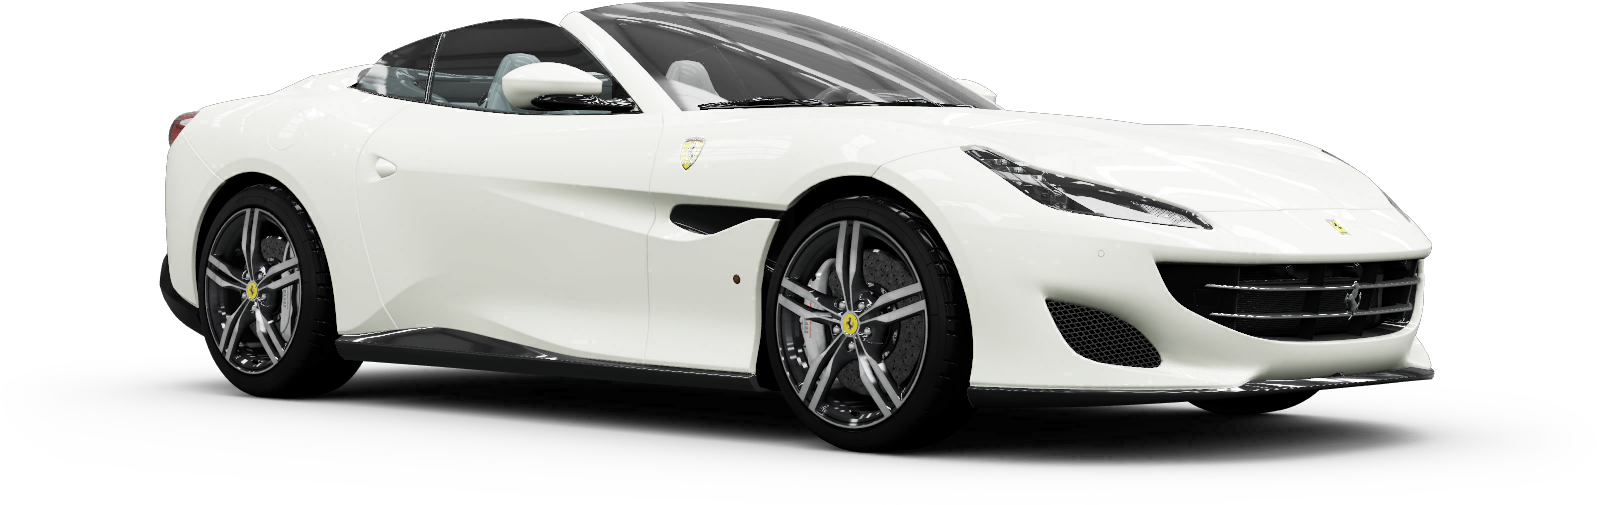 White Ferrari Convertible Side View